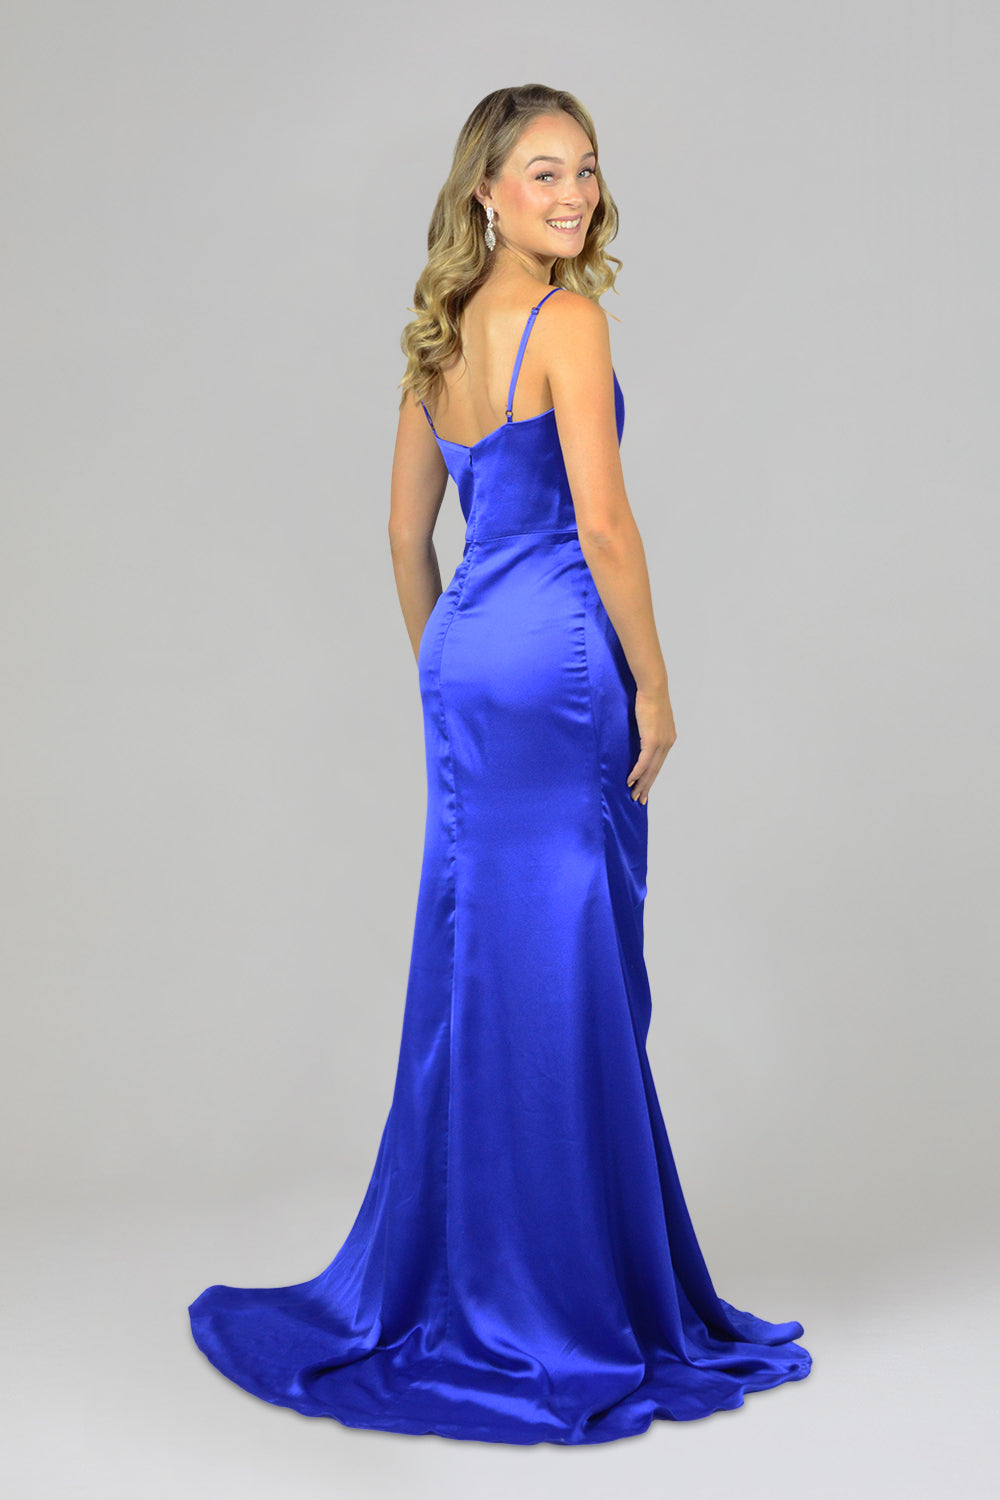 royal blue silk bridesmaid dresses australia online made to order envious bridal & formal